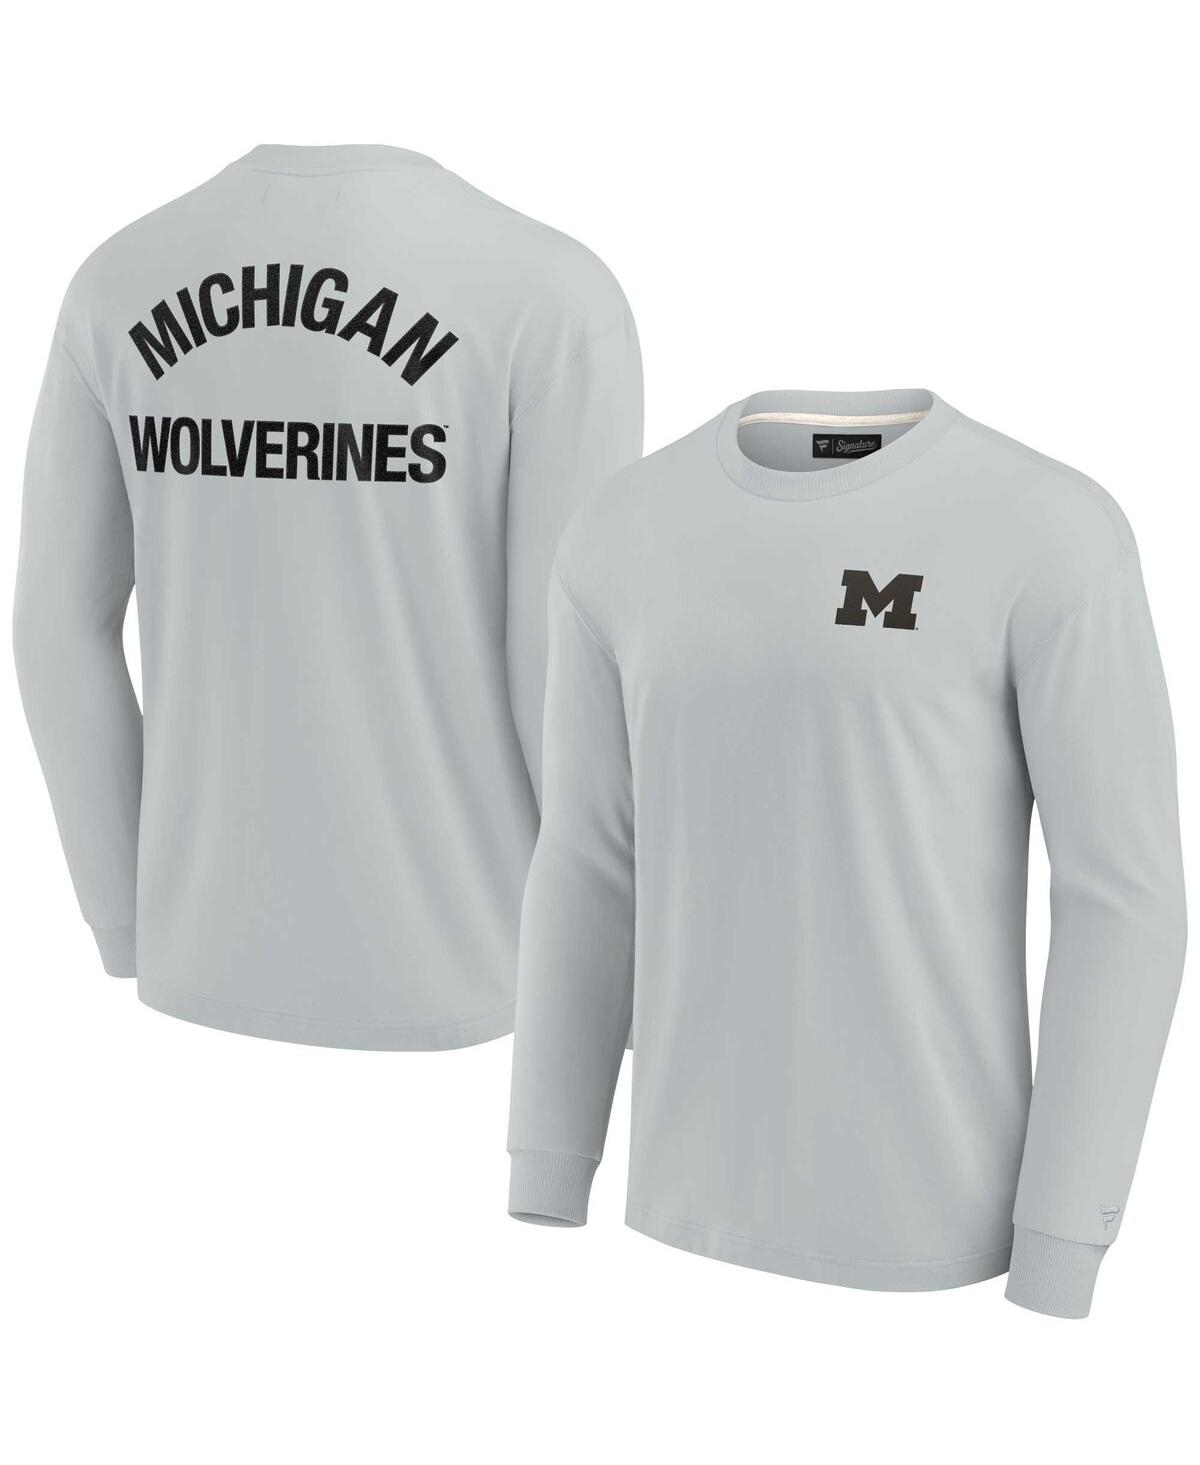 Men's and Women's Fanatics Signature Gray Michigan Wolverines Super Soft Long Sleeve T-shirt - Gray